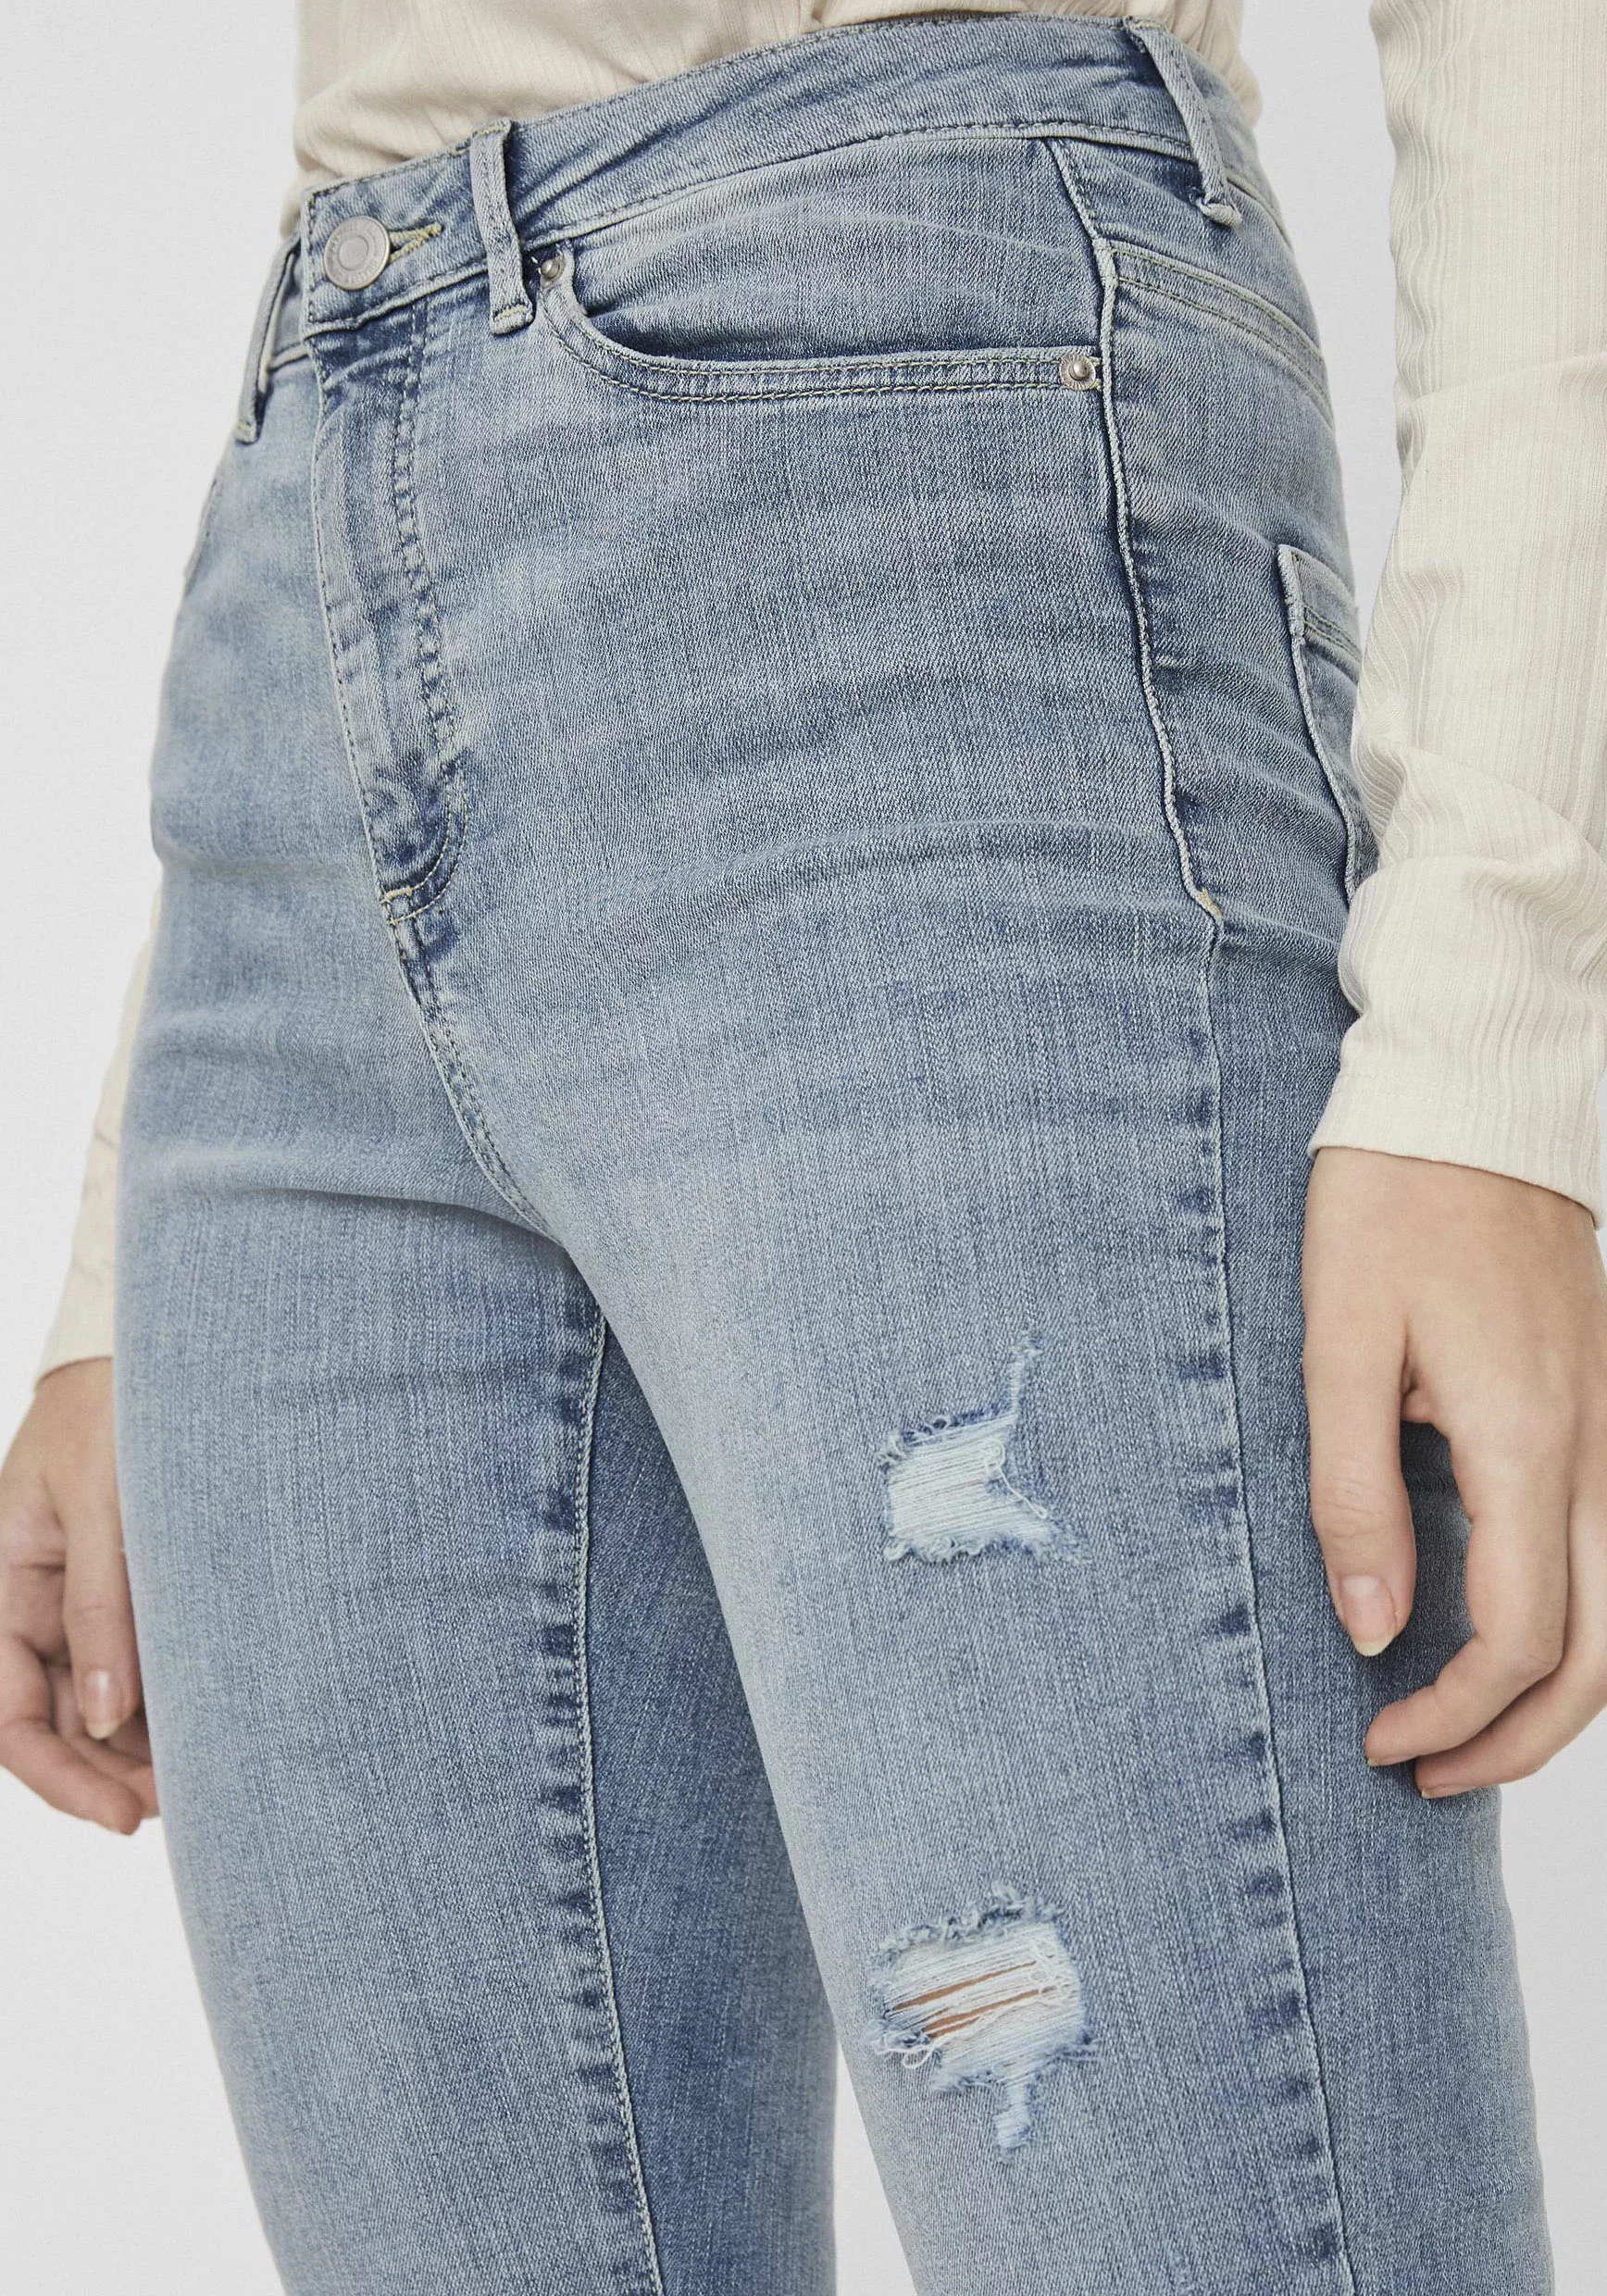 Vero Moda Damen Jeans VMSOPHIA AM314 - Skinny Fit - Blau - Light Blue Denim günstig online kaufen